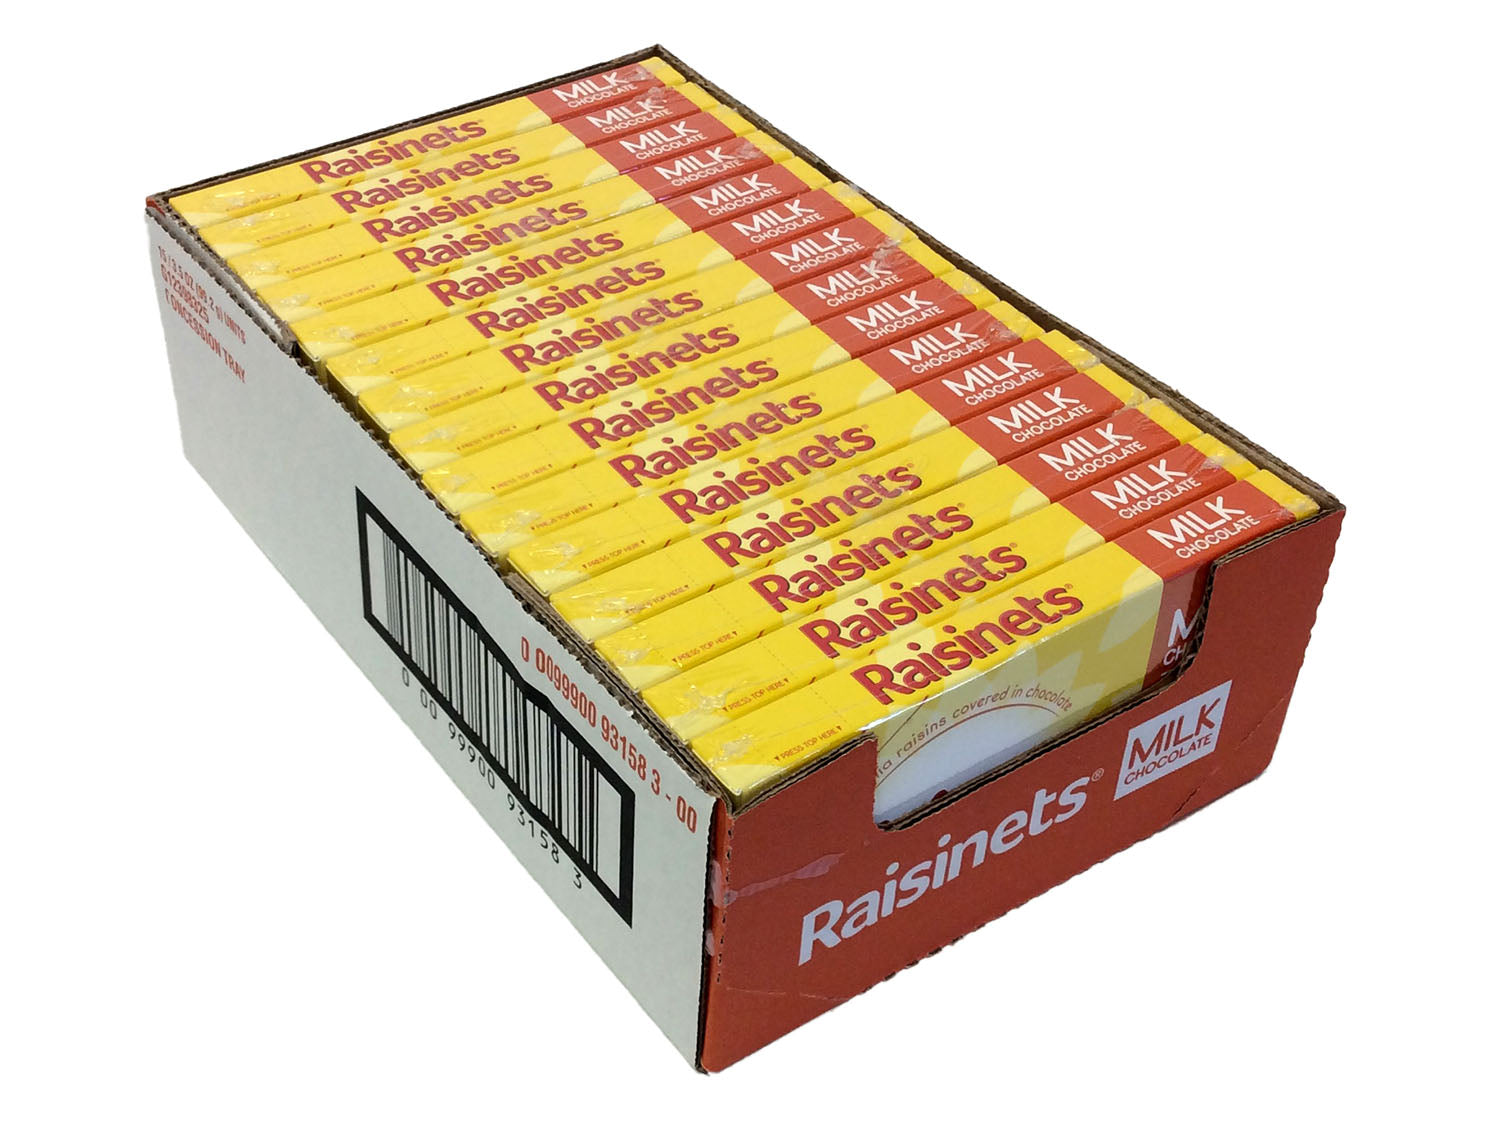 Raisinets - 3.5 oz Theater Box - case of 15